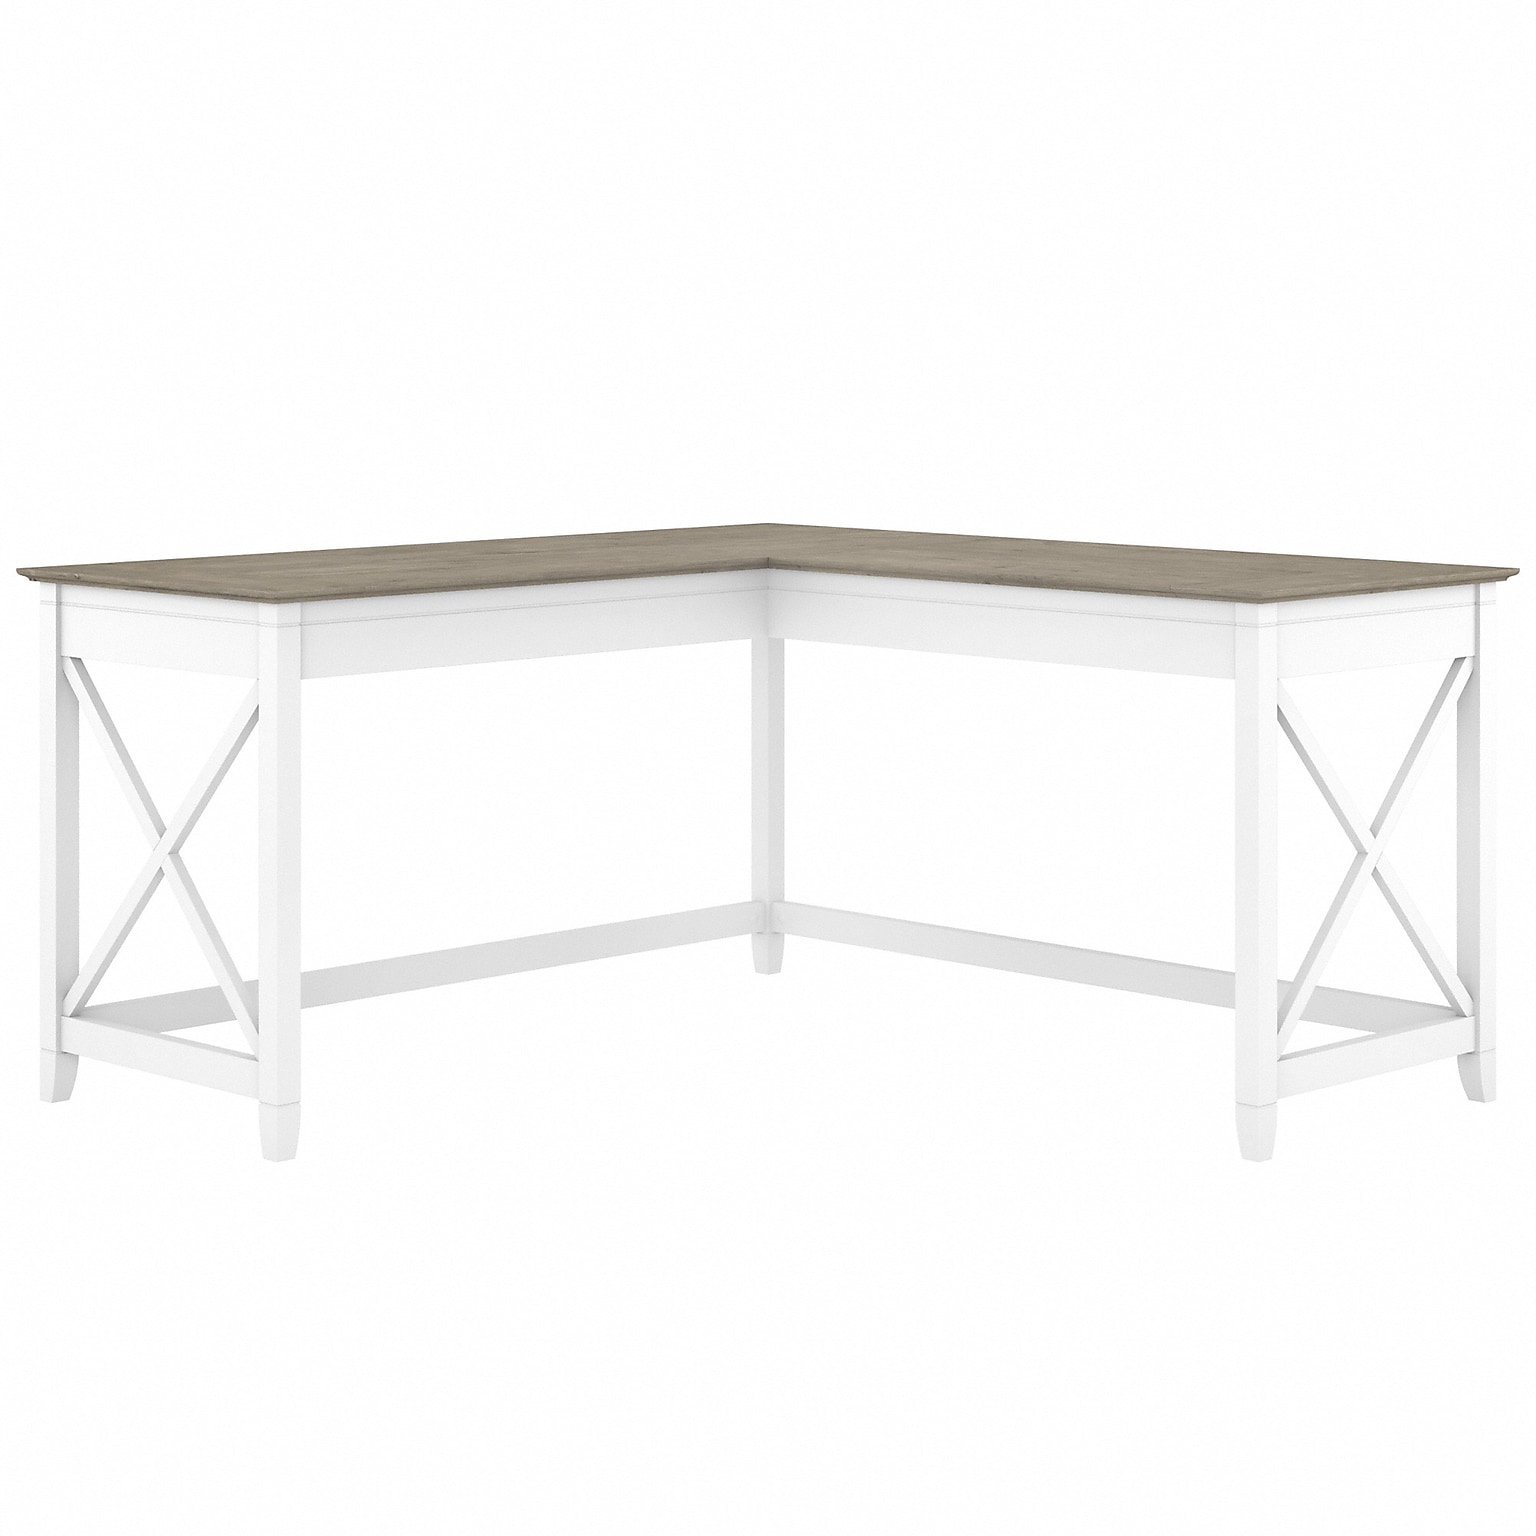 Bush Furniture Key West 60 L-Shaped Desk, Shiplap Gray/Pure White (KWD160G2W-03)